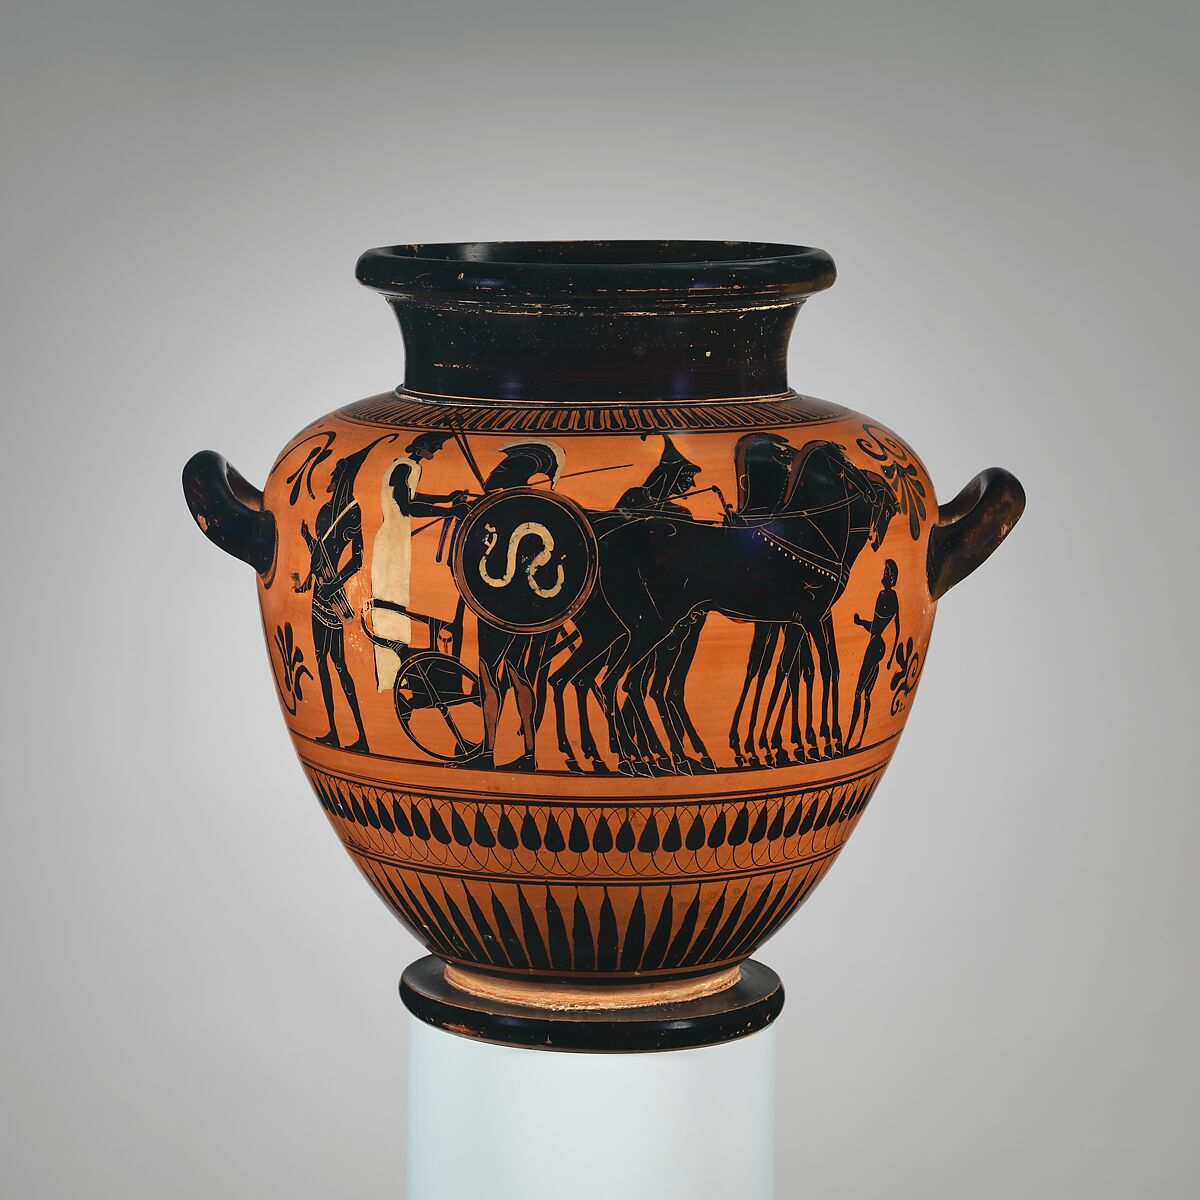 Terracotta stamnos (jar), Attributed to the Painter of London B 343, Terracotta, Greek, Attic 